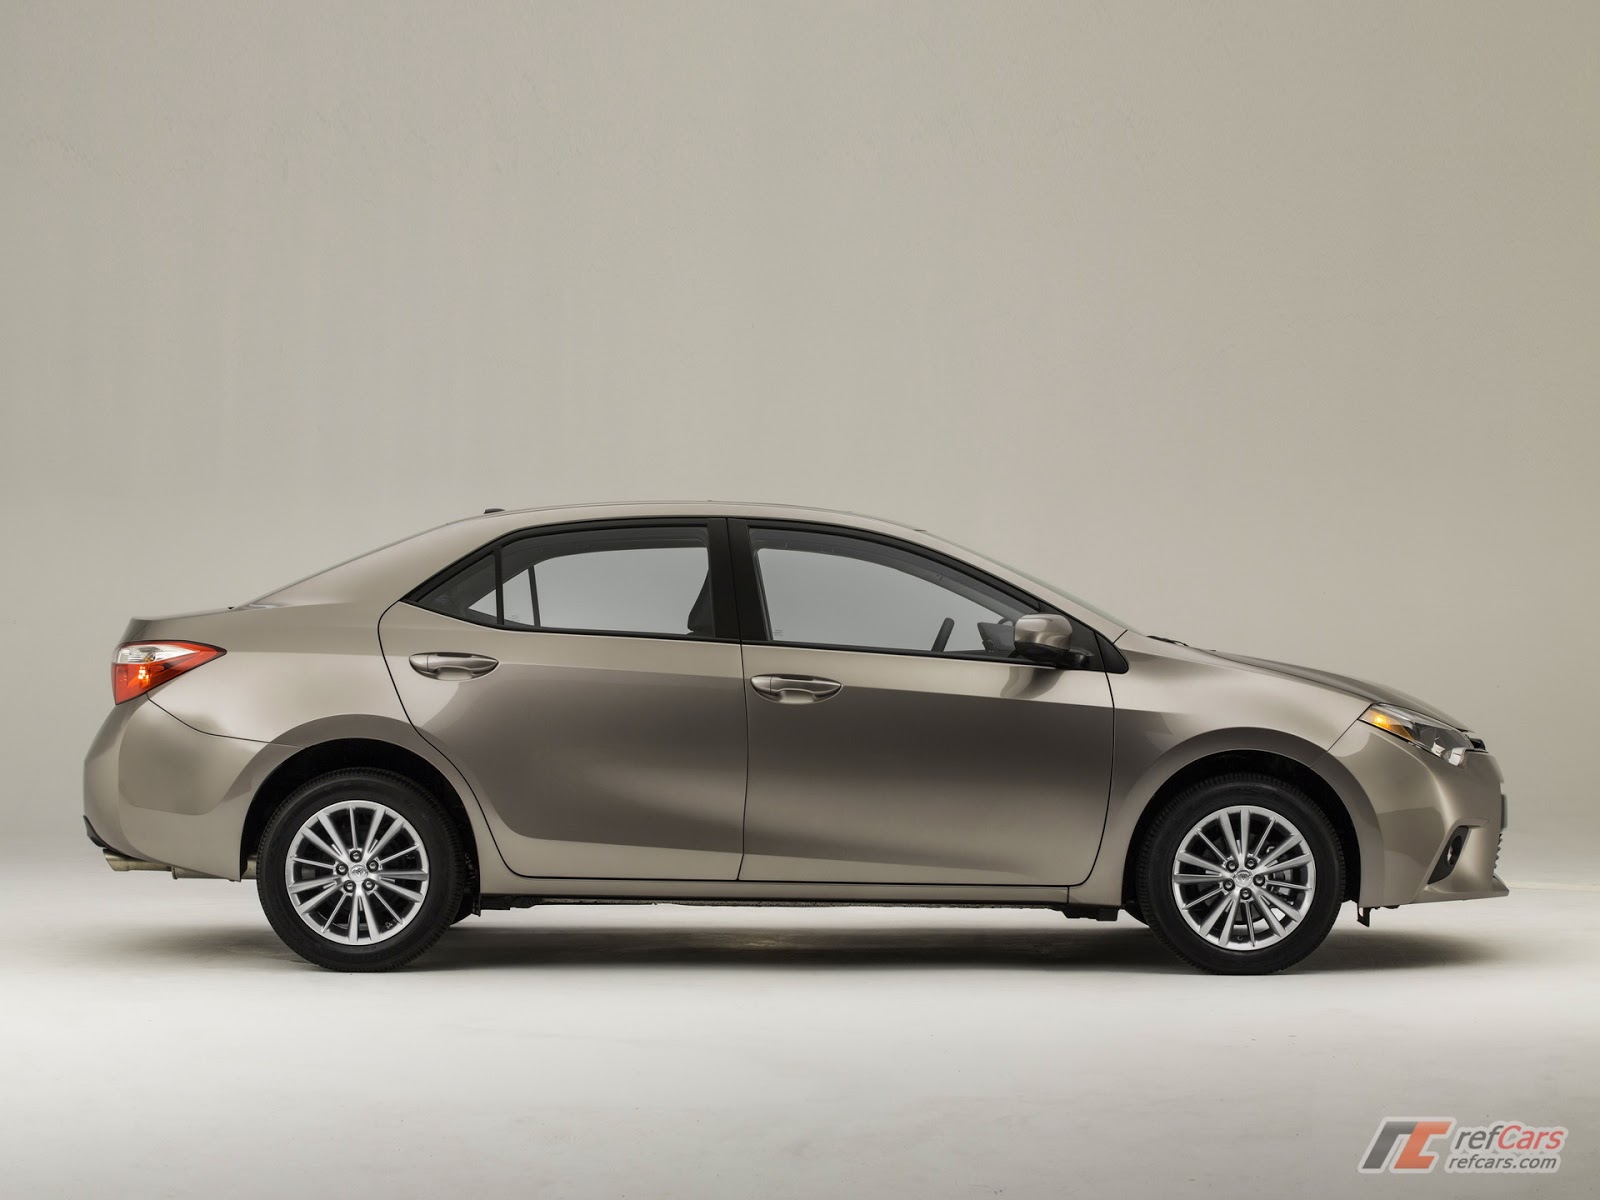 refCars: Toyota Next-Generation 2014 Corolla Sedan